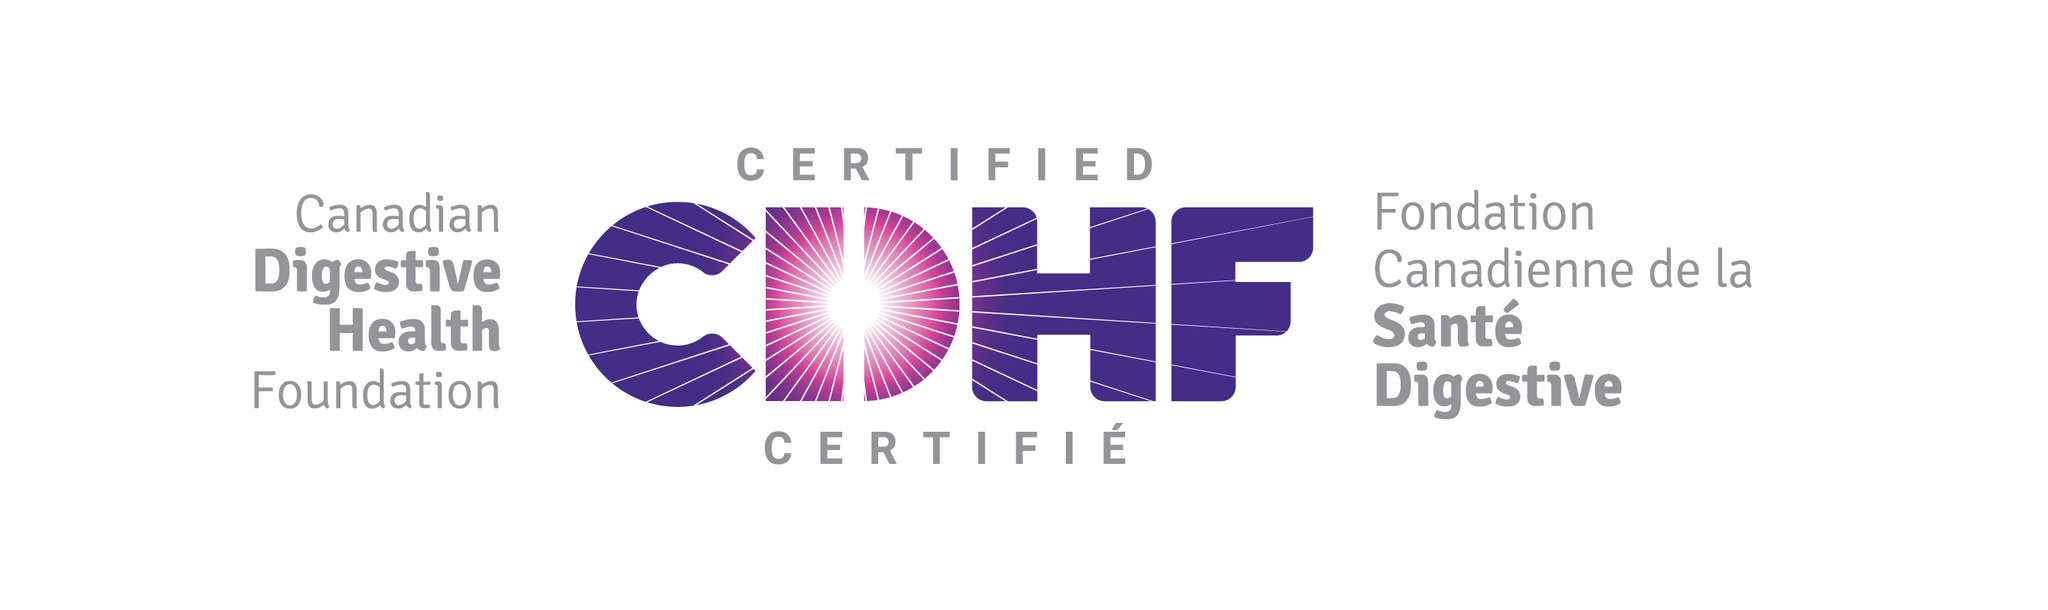 CDHF certified logo